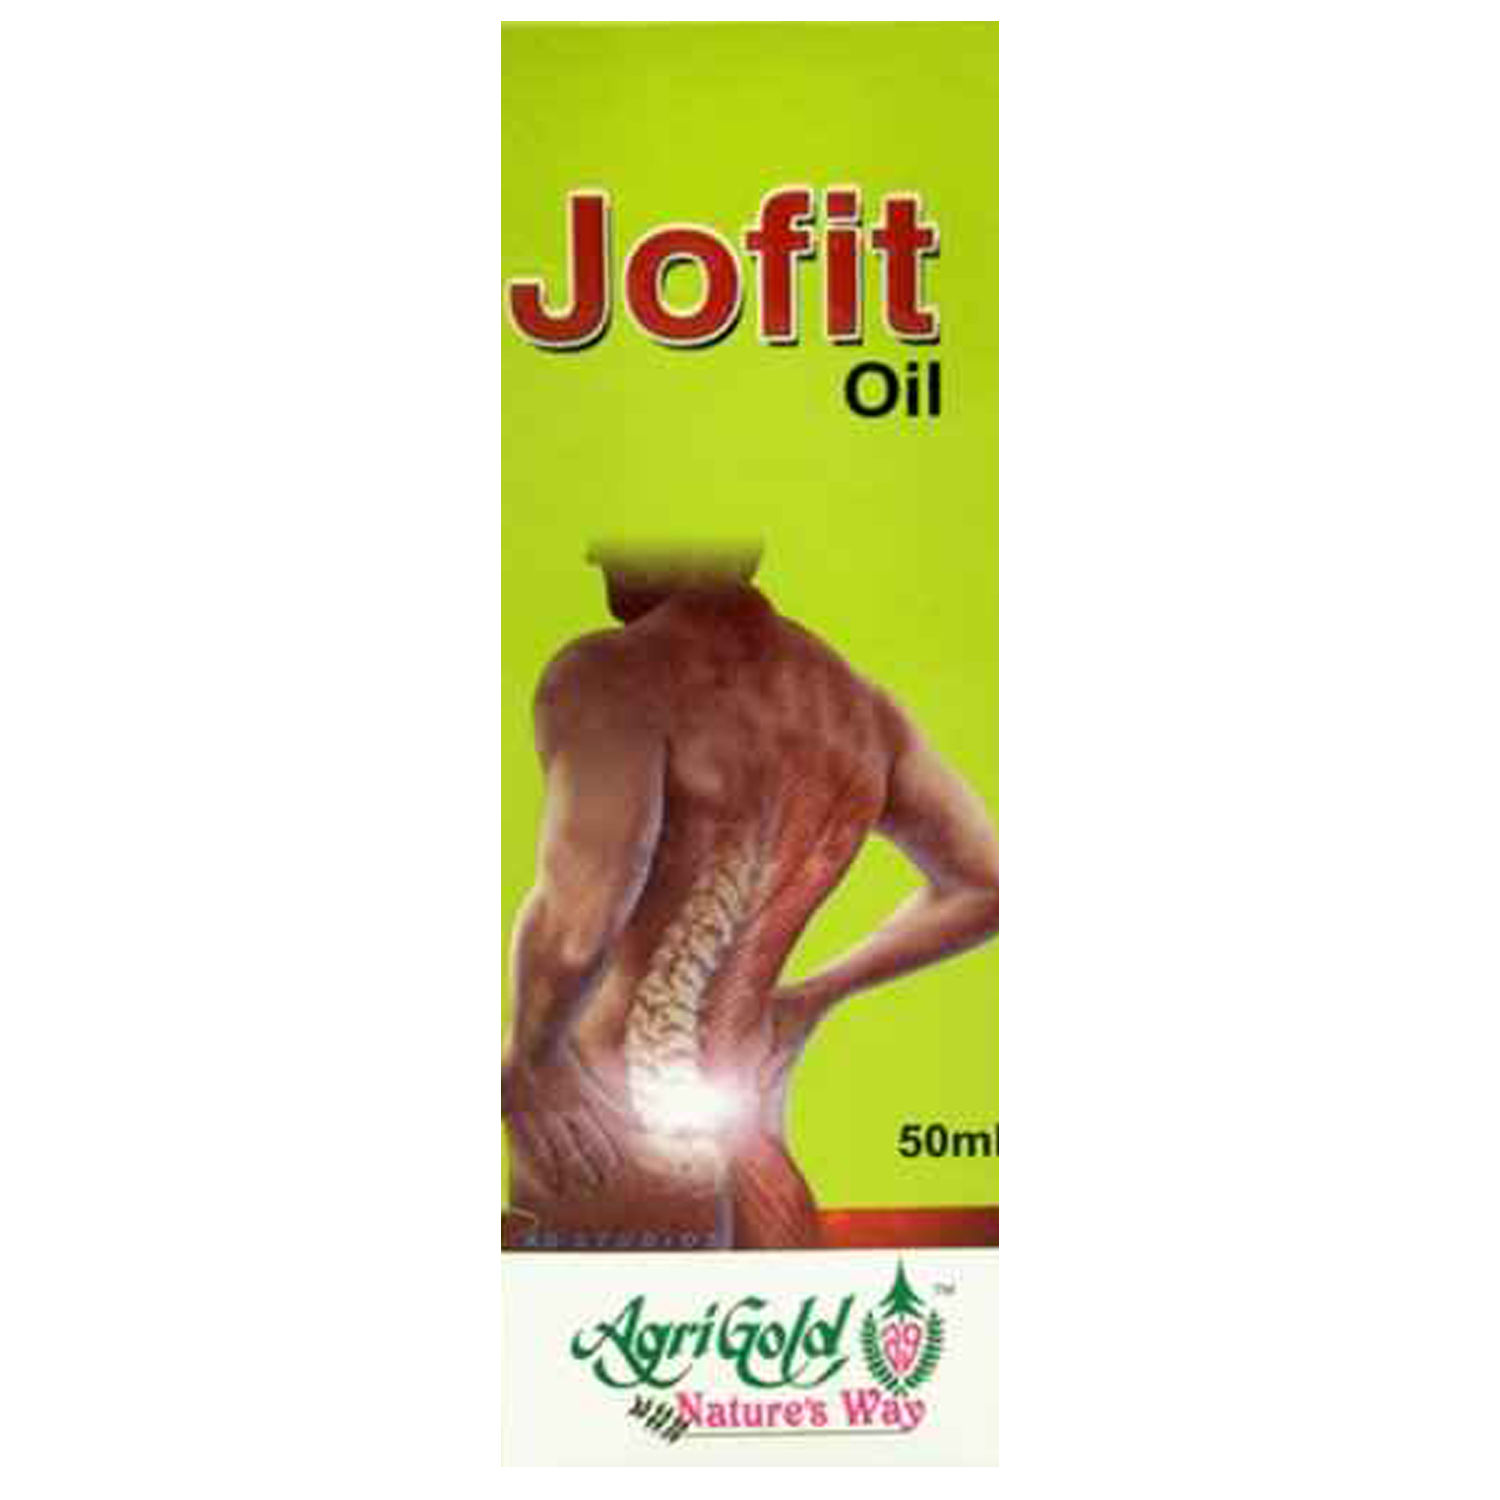 Jofit Oil 50ml, Pack of 1 